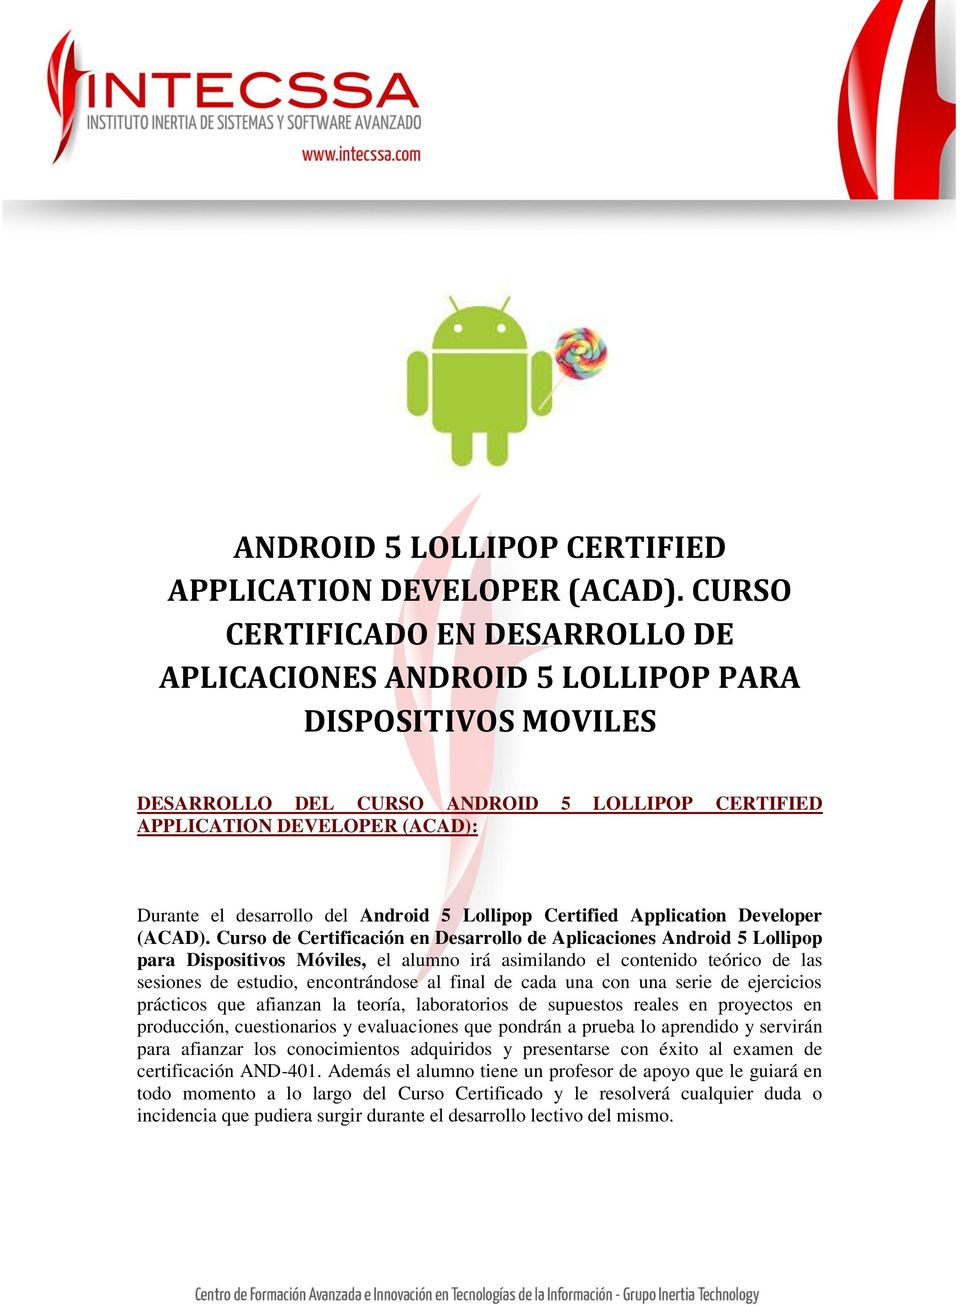 Android 5 Lollipop Certified Application Developer (ACAD).